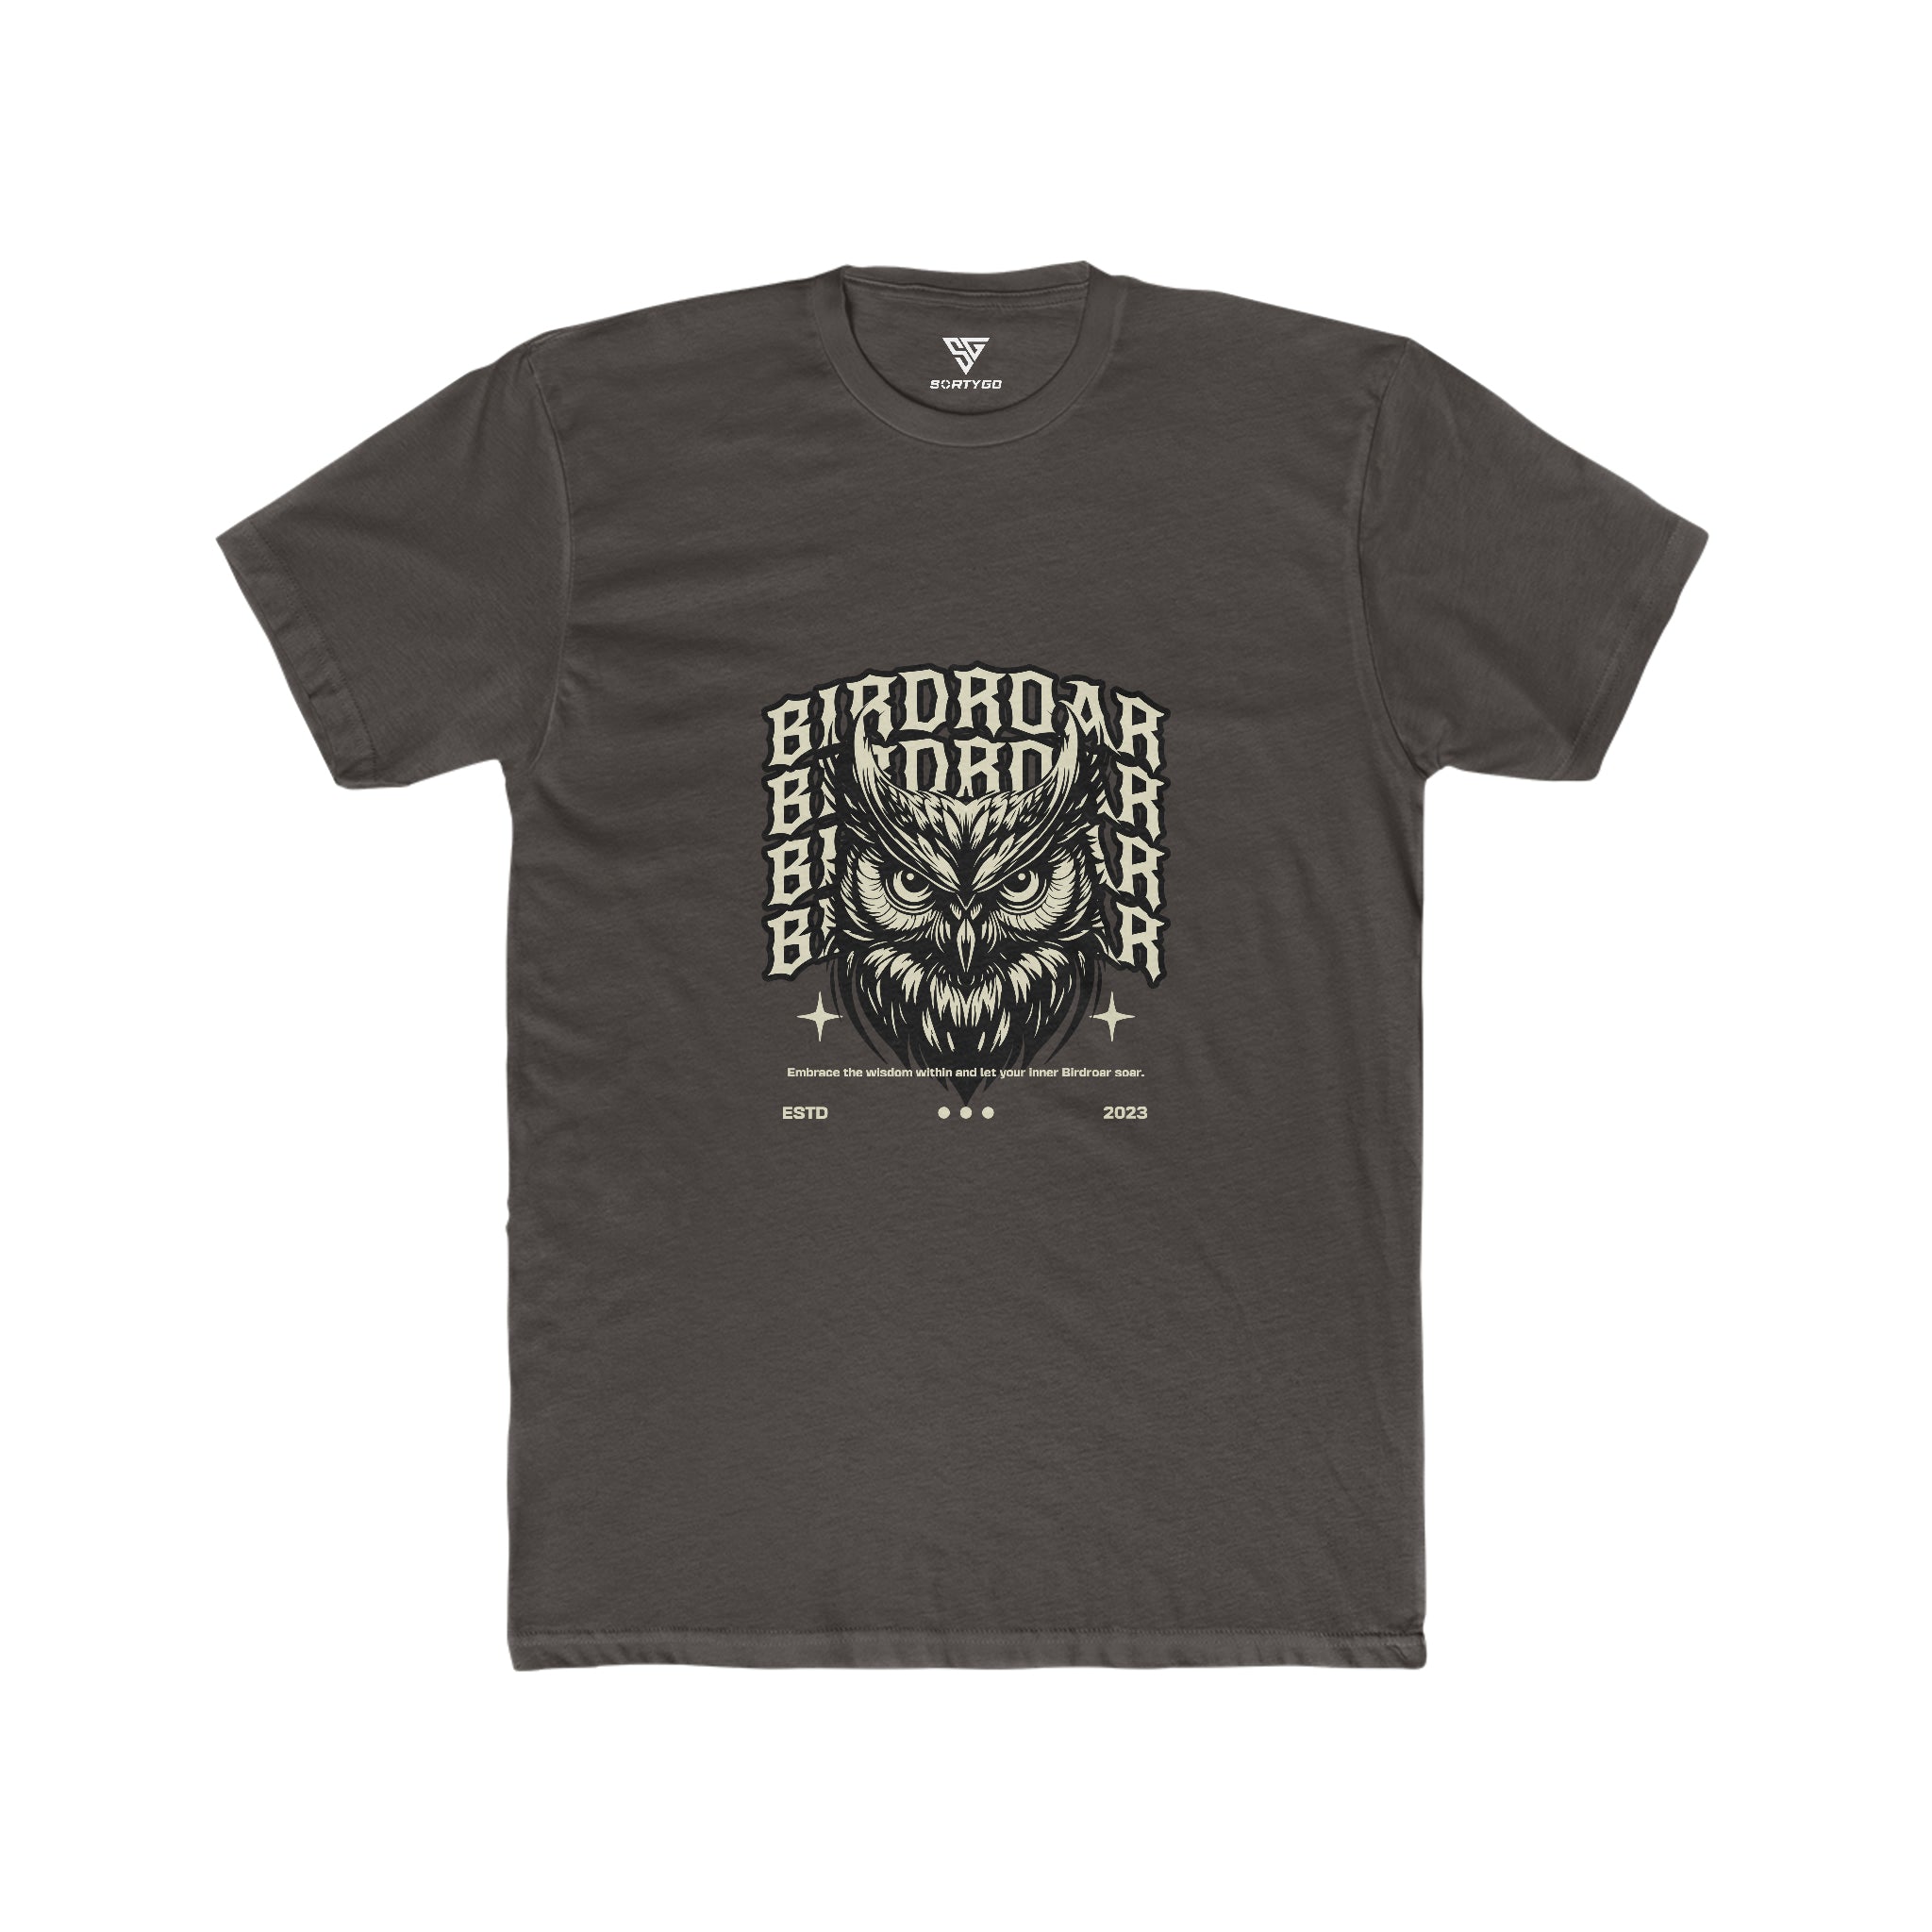 SORTYGO - Birdroar Men Fitted T-Shirt in Solid Dark Chocolate